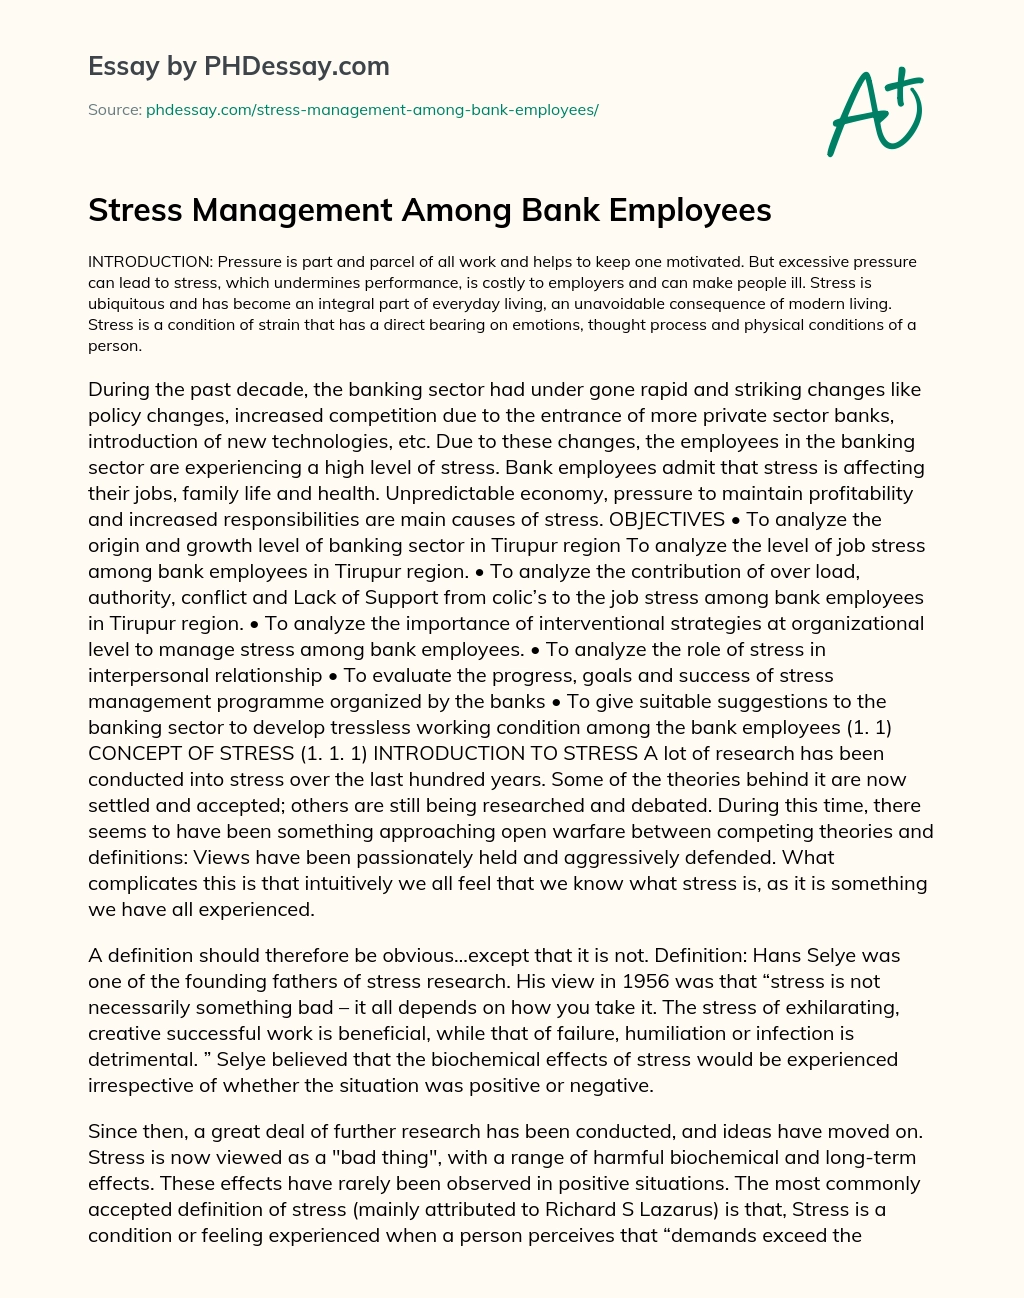 Stress Management Among Bank Employees essay